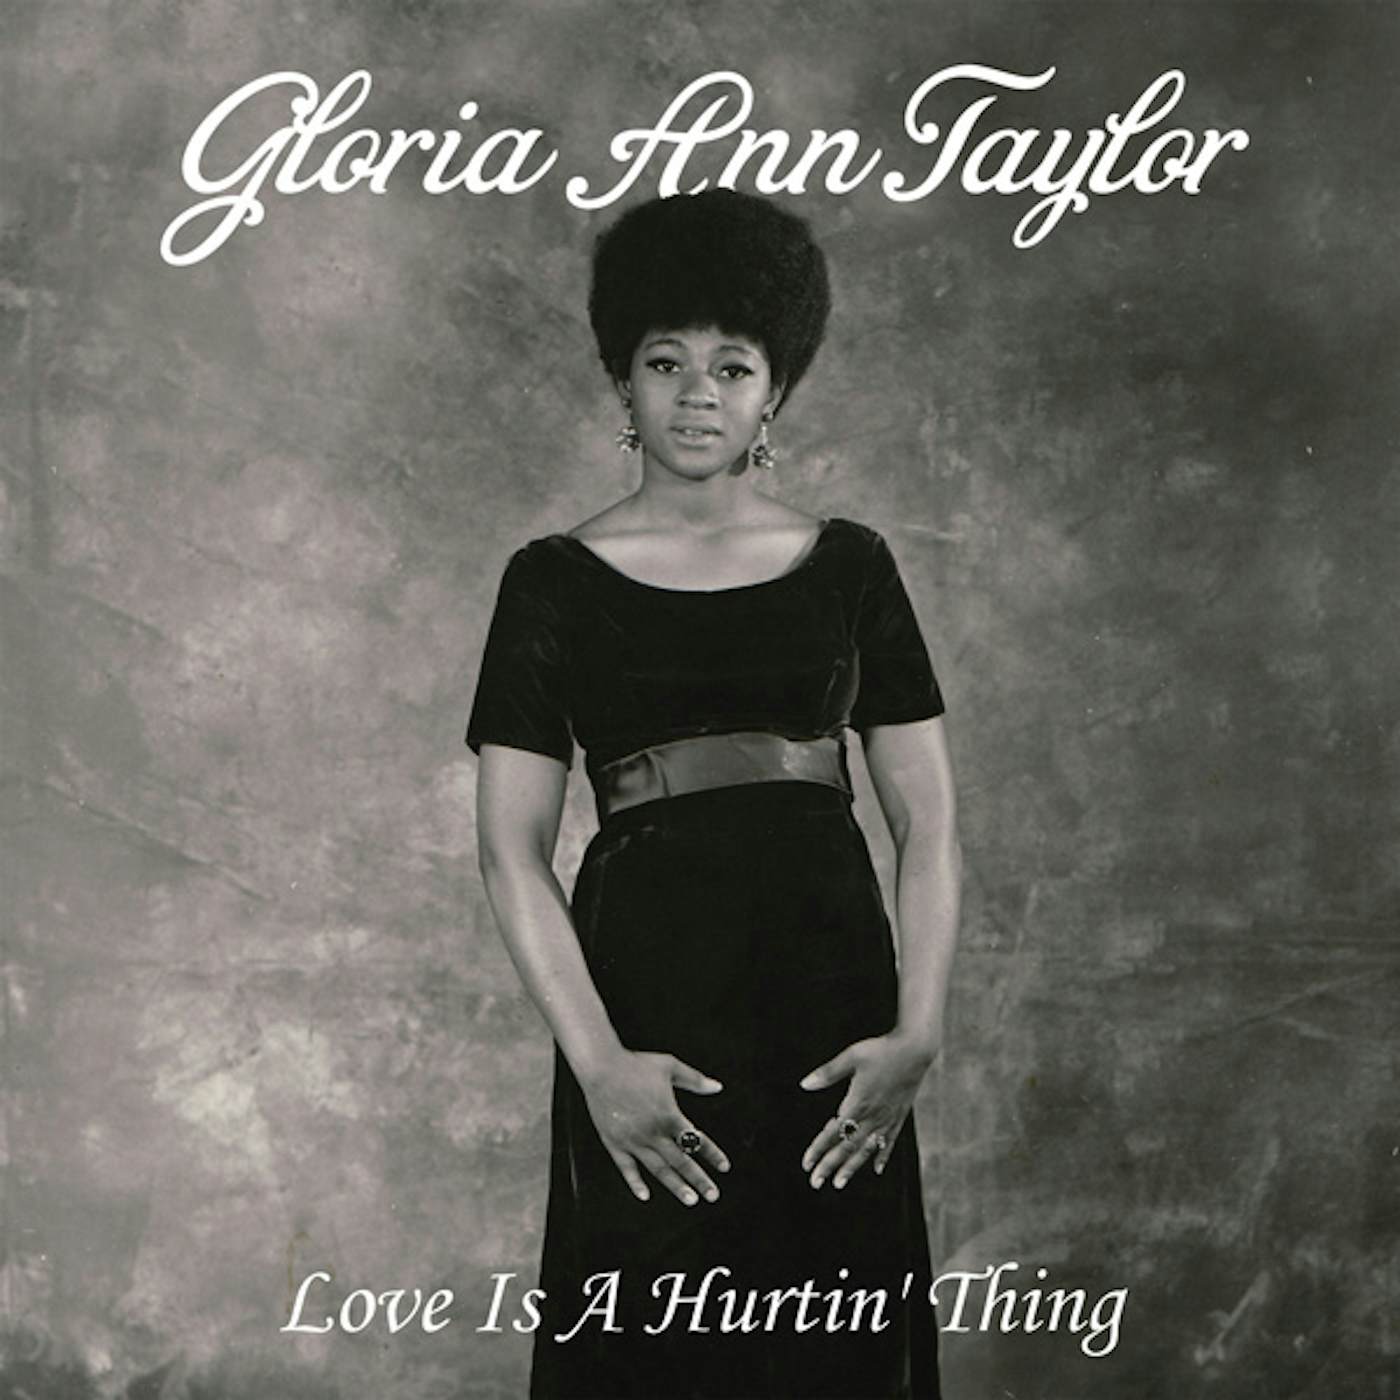 Gloria Ann Taylor Love Is a Hurtin' Thing Vinyl Record